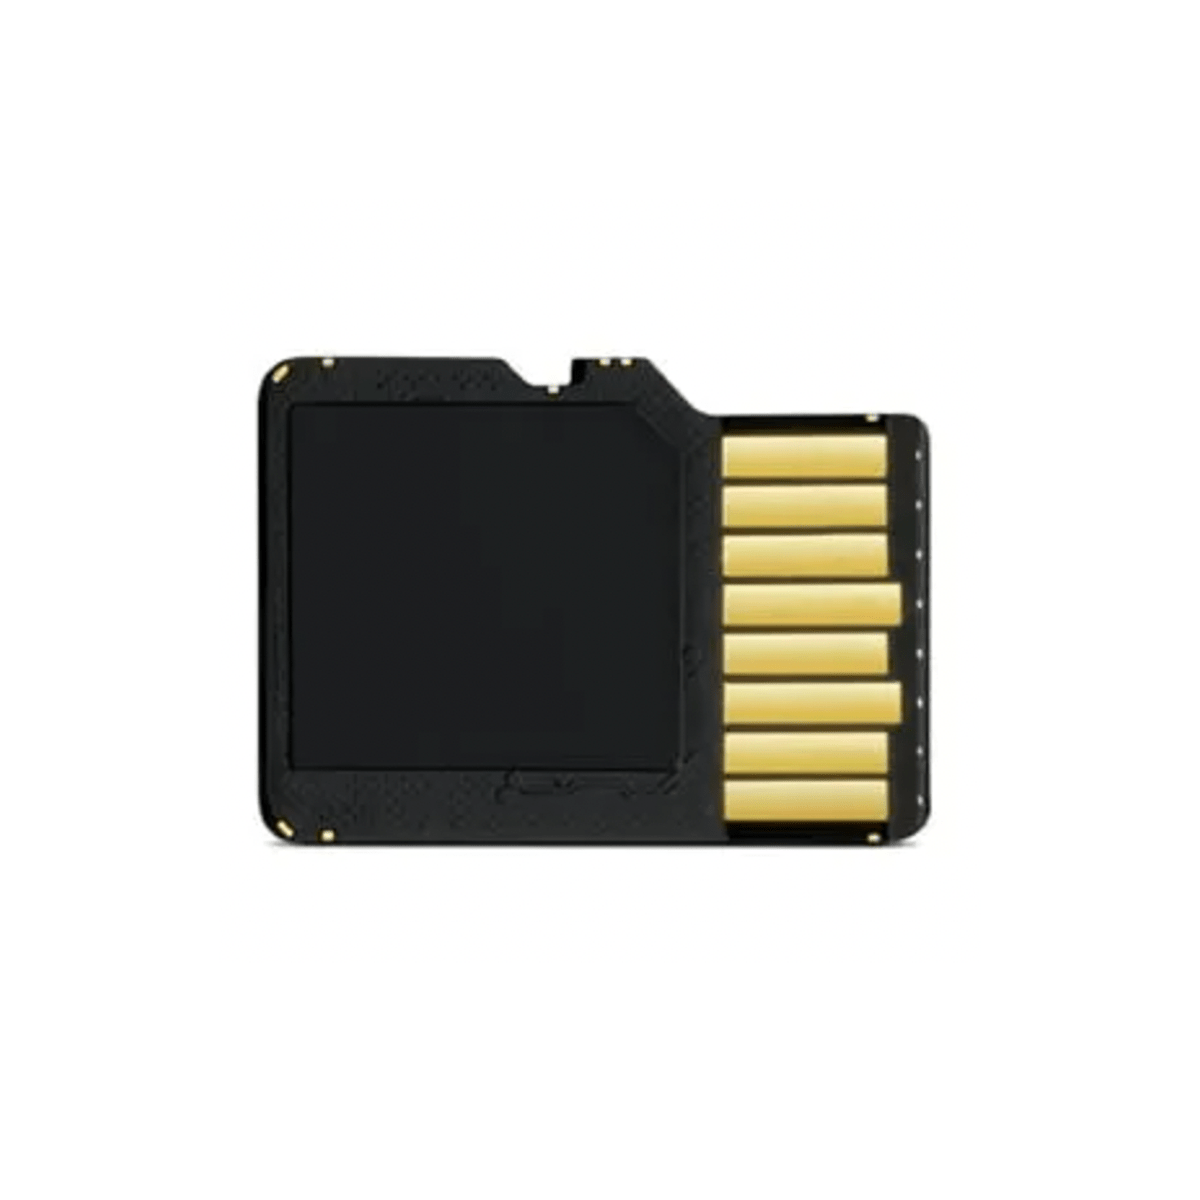 Garmin 16 GB microSD™ Class 10 Card with SD Adapter - Dongar Technologies LLC